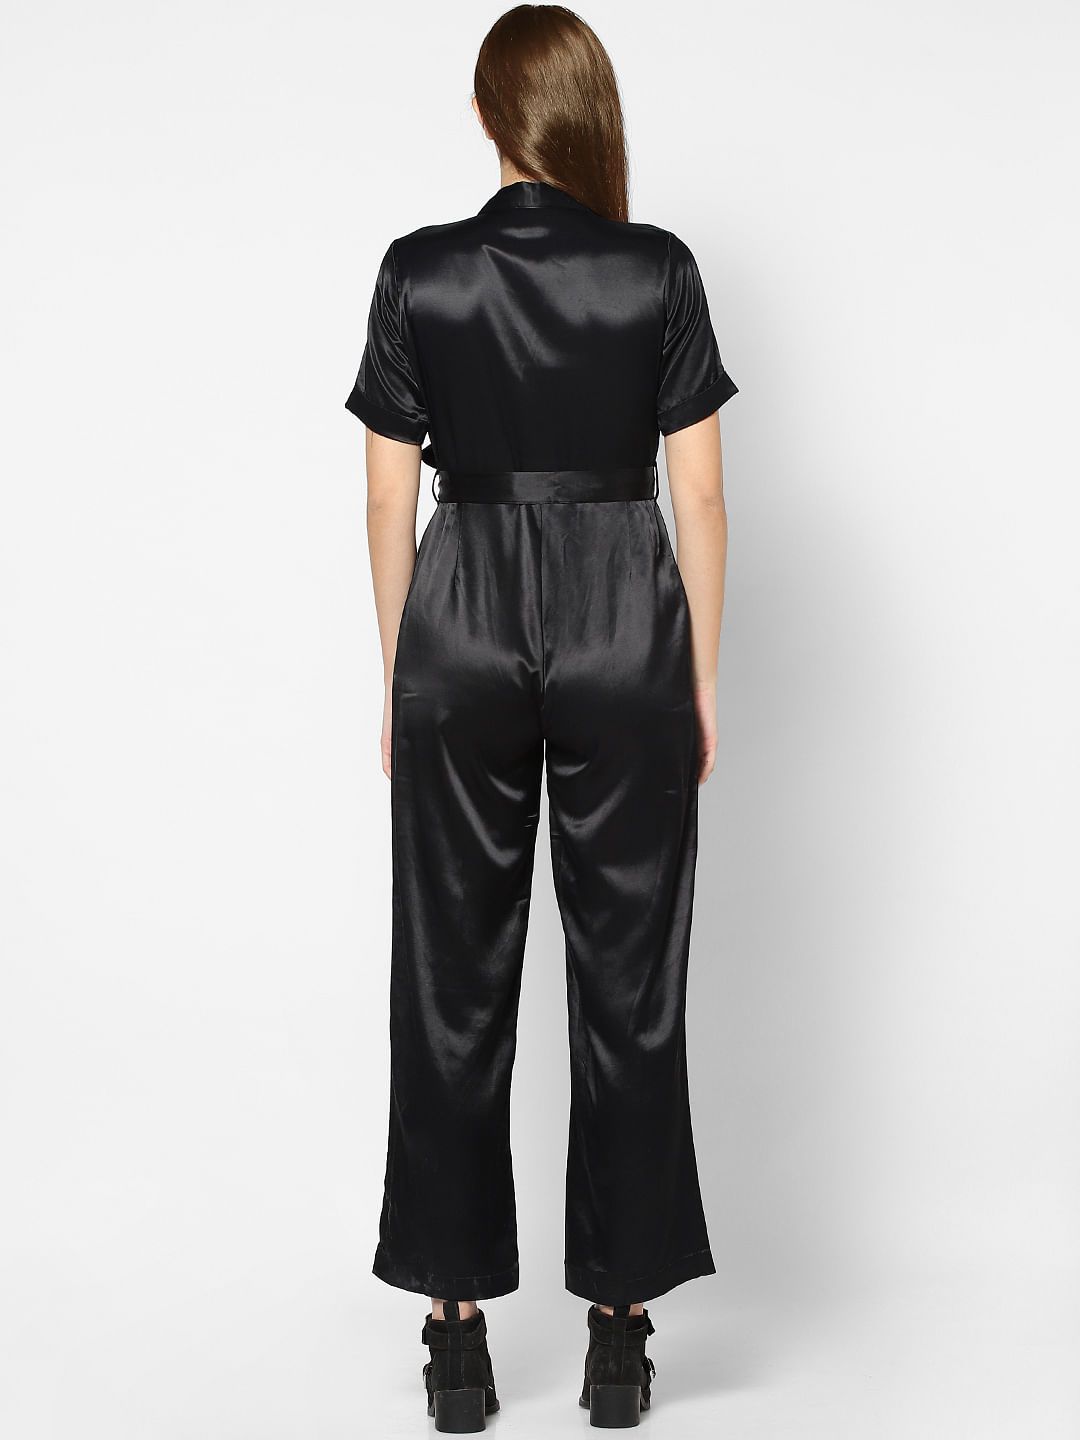 discount 60% H&M slacks WOMEN FASHION Trousers Slacks Leatherette Black 36                  EU 